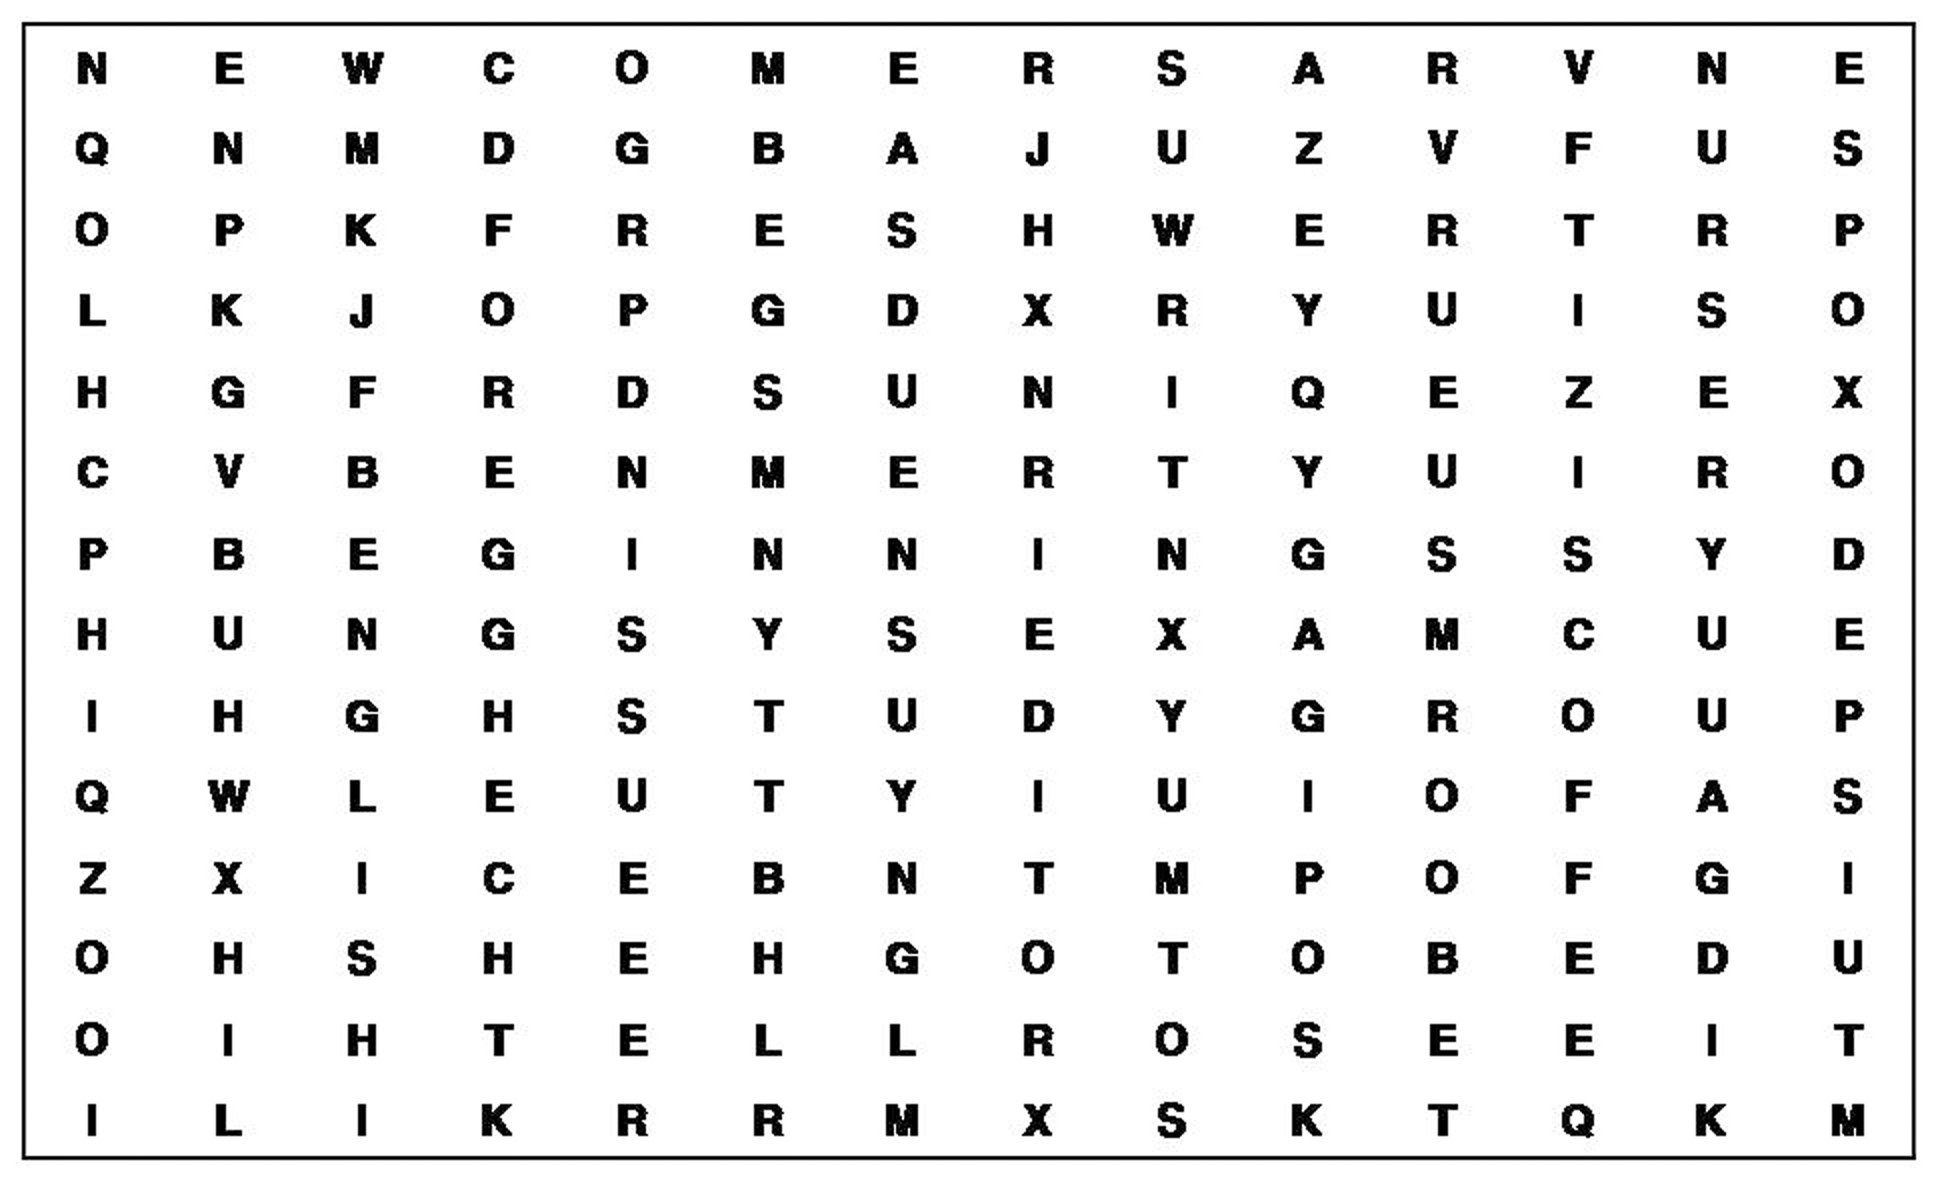 Find the hidden word!